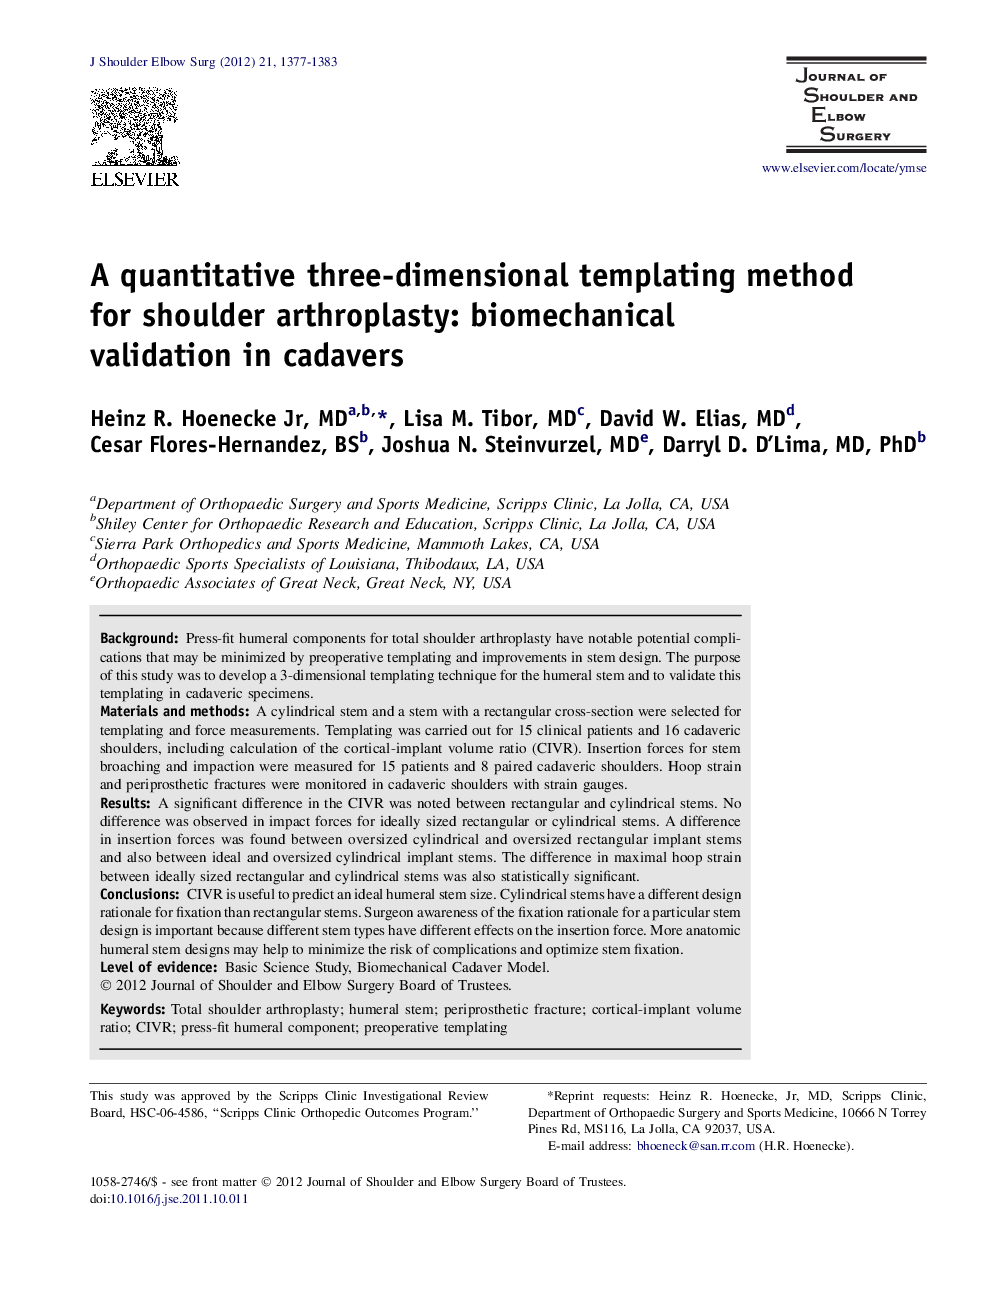 A quantitative three-dimensional templating method for shoulder arthroplasty: biomechanical validation in cadavers